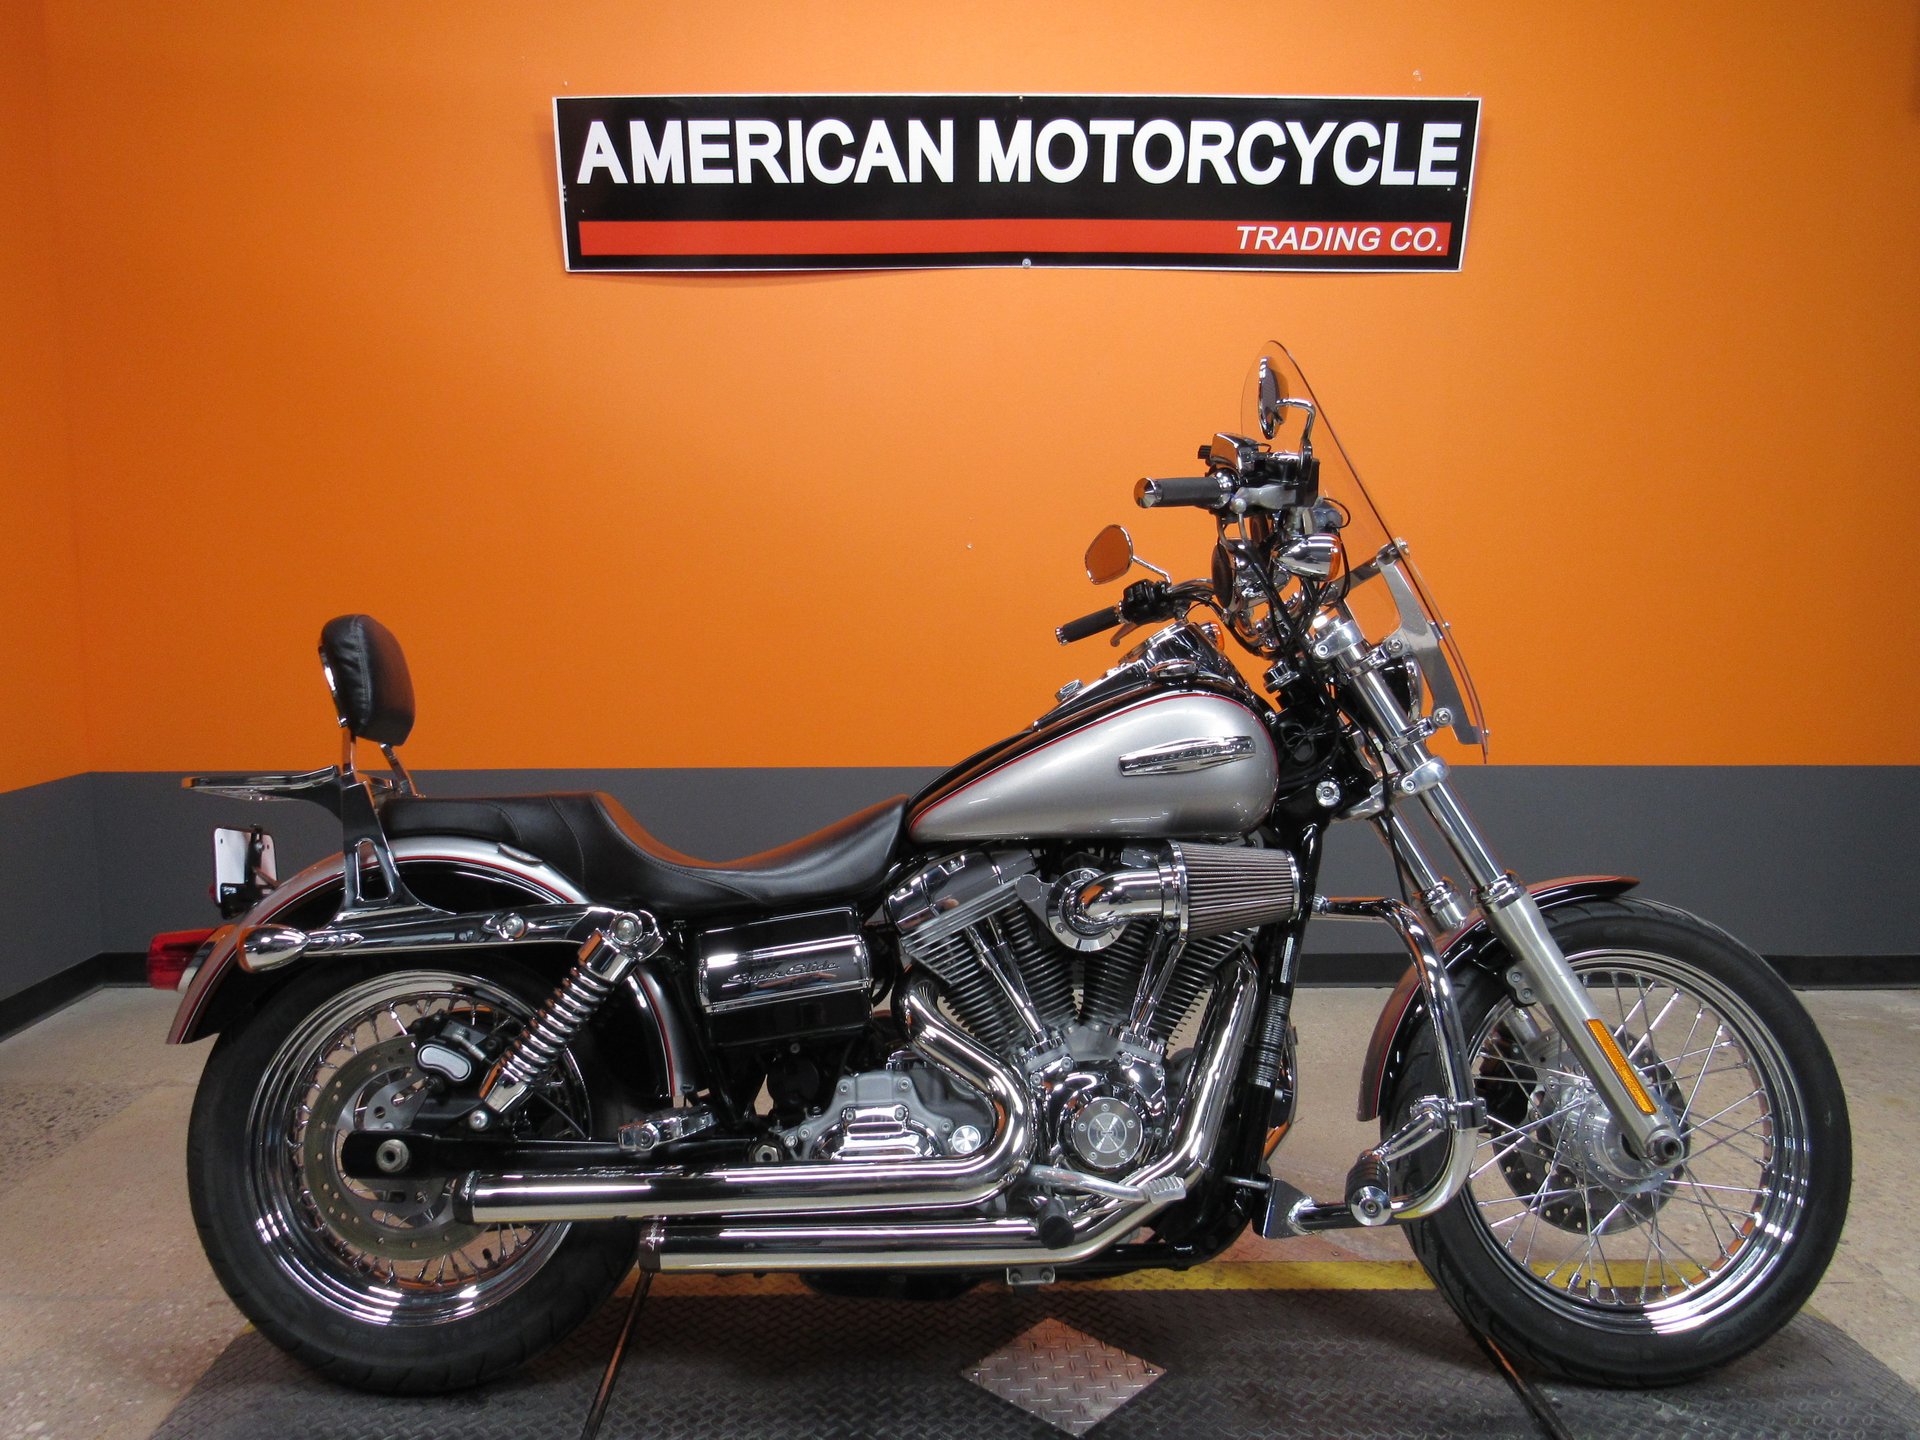 2009 Harley-Davidson Dyna Super Glide | American Motorcycle Trading ...